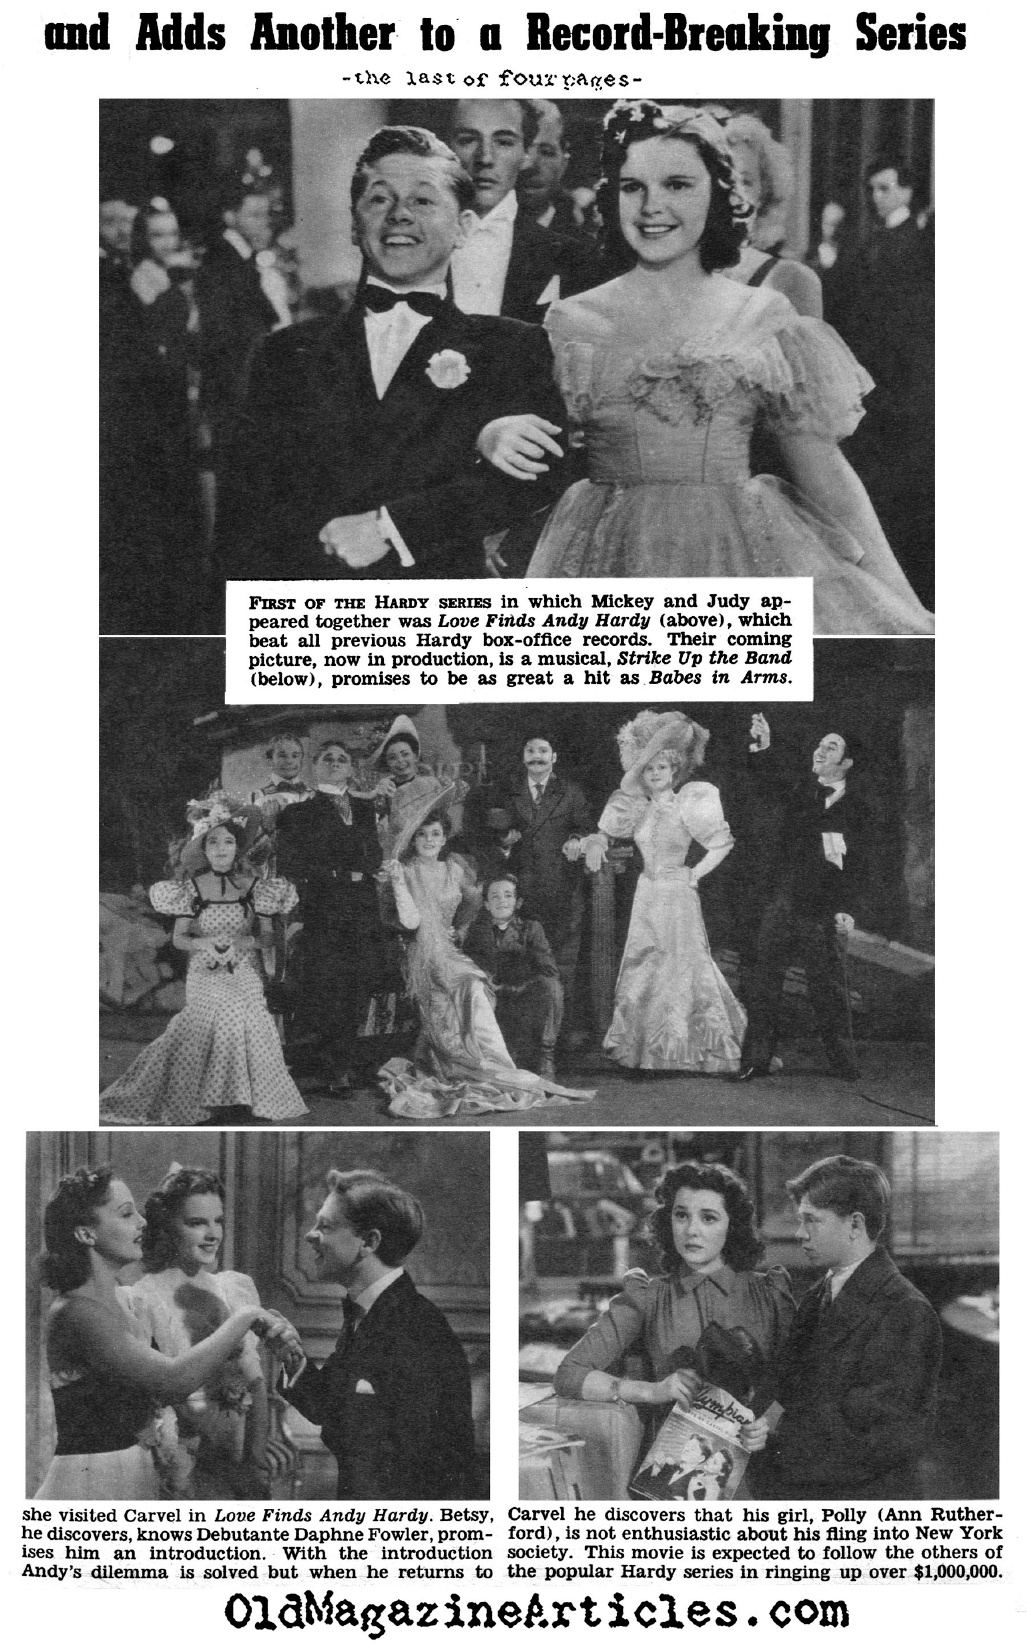 Judy Garland (Click Magazine, 1940)